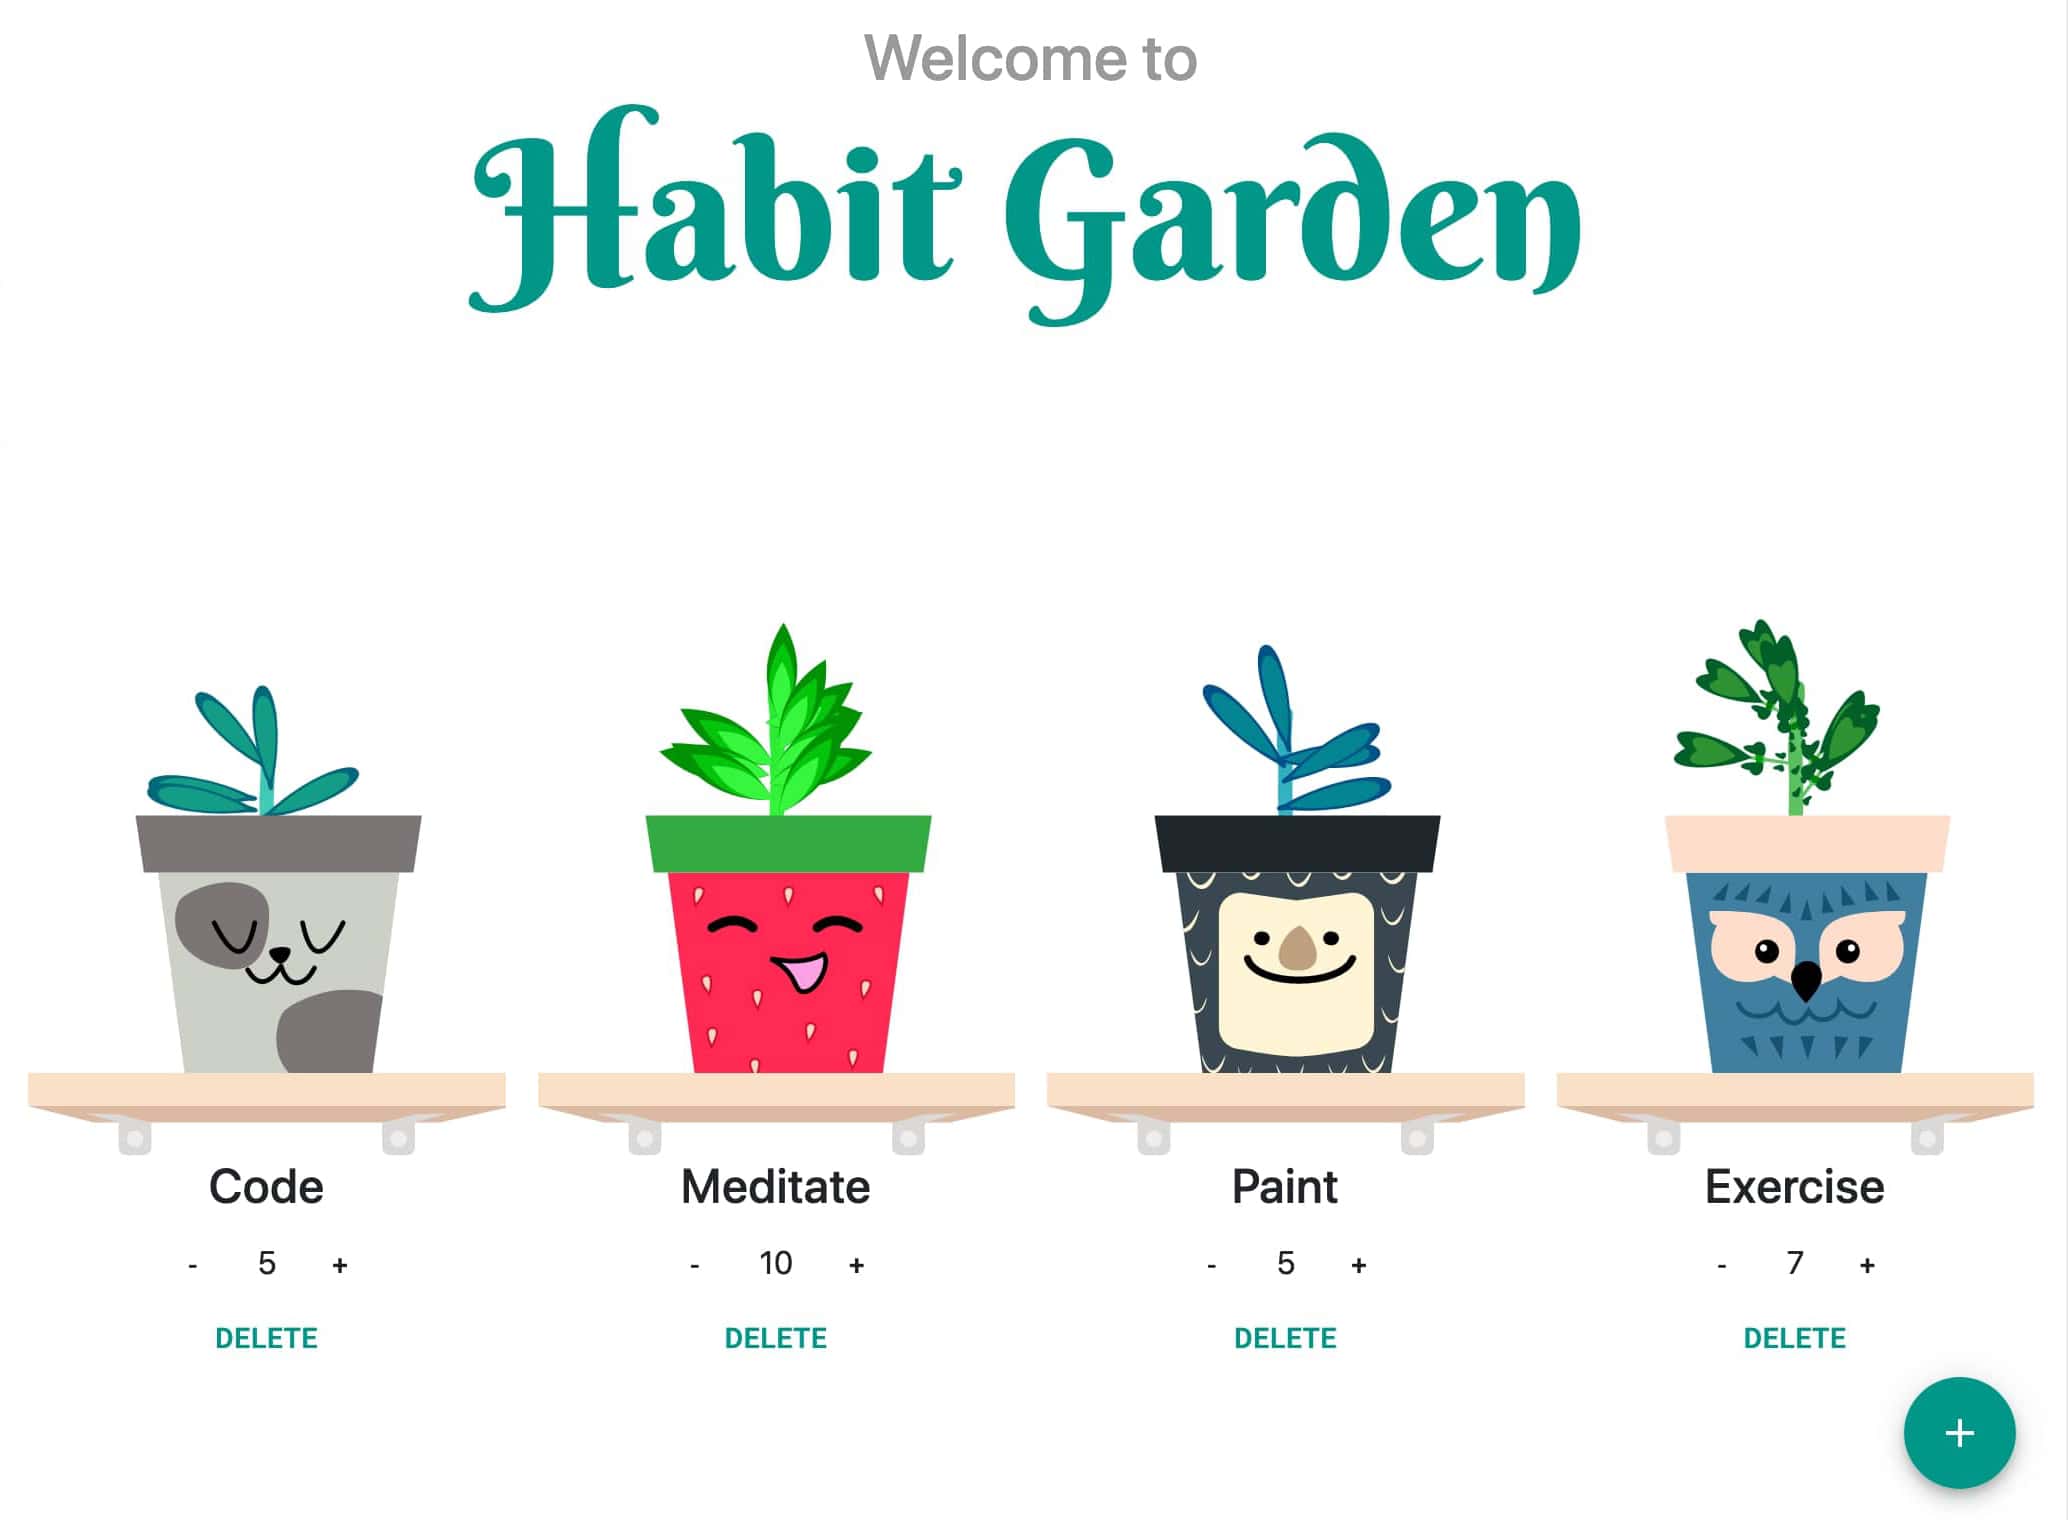 Habit Garden habit tracking